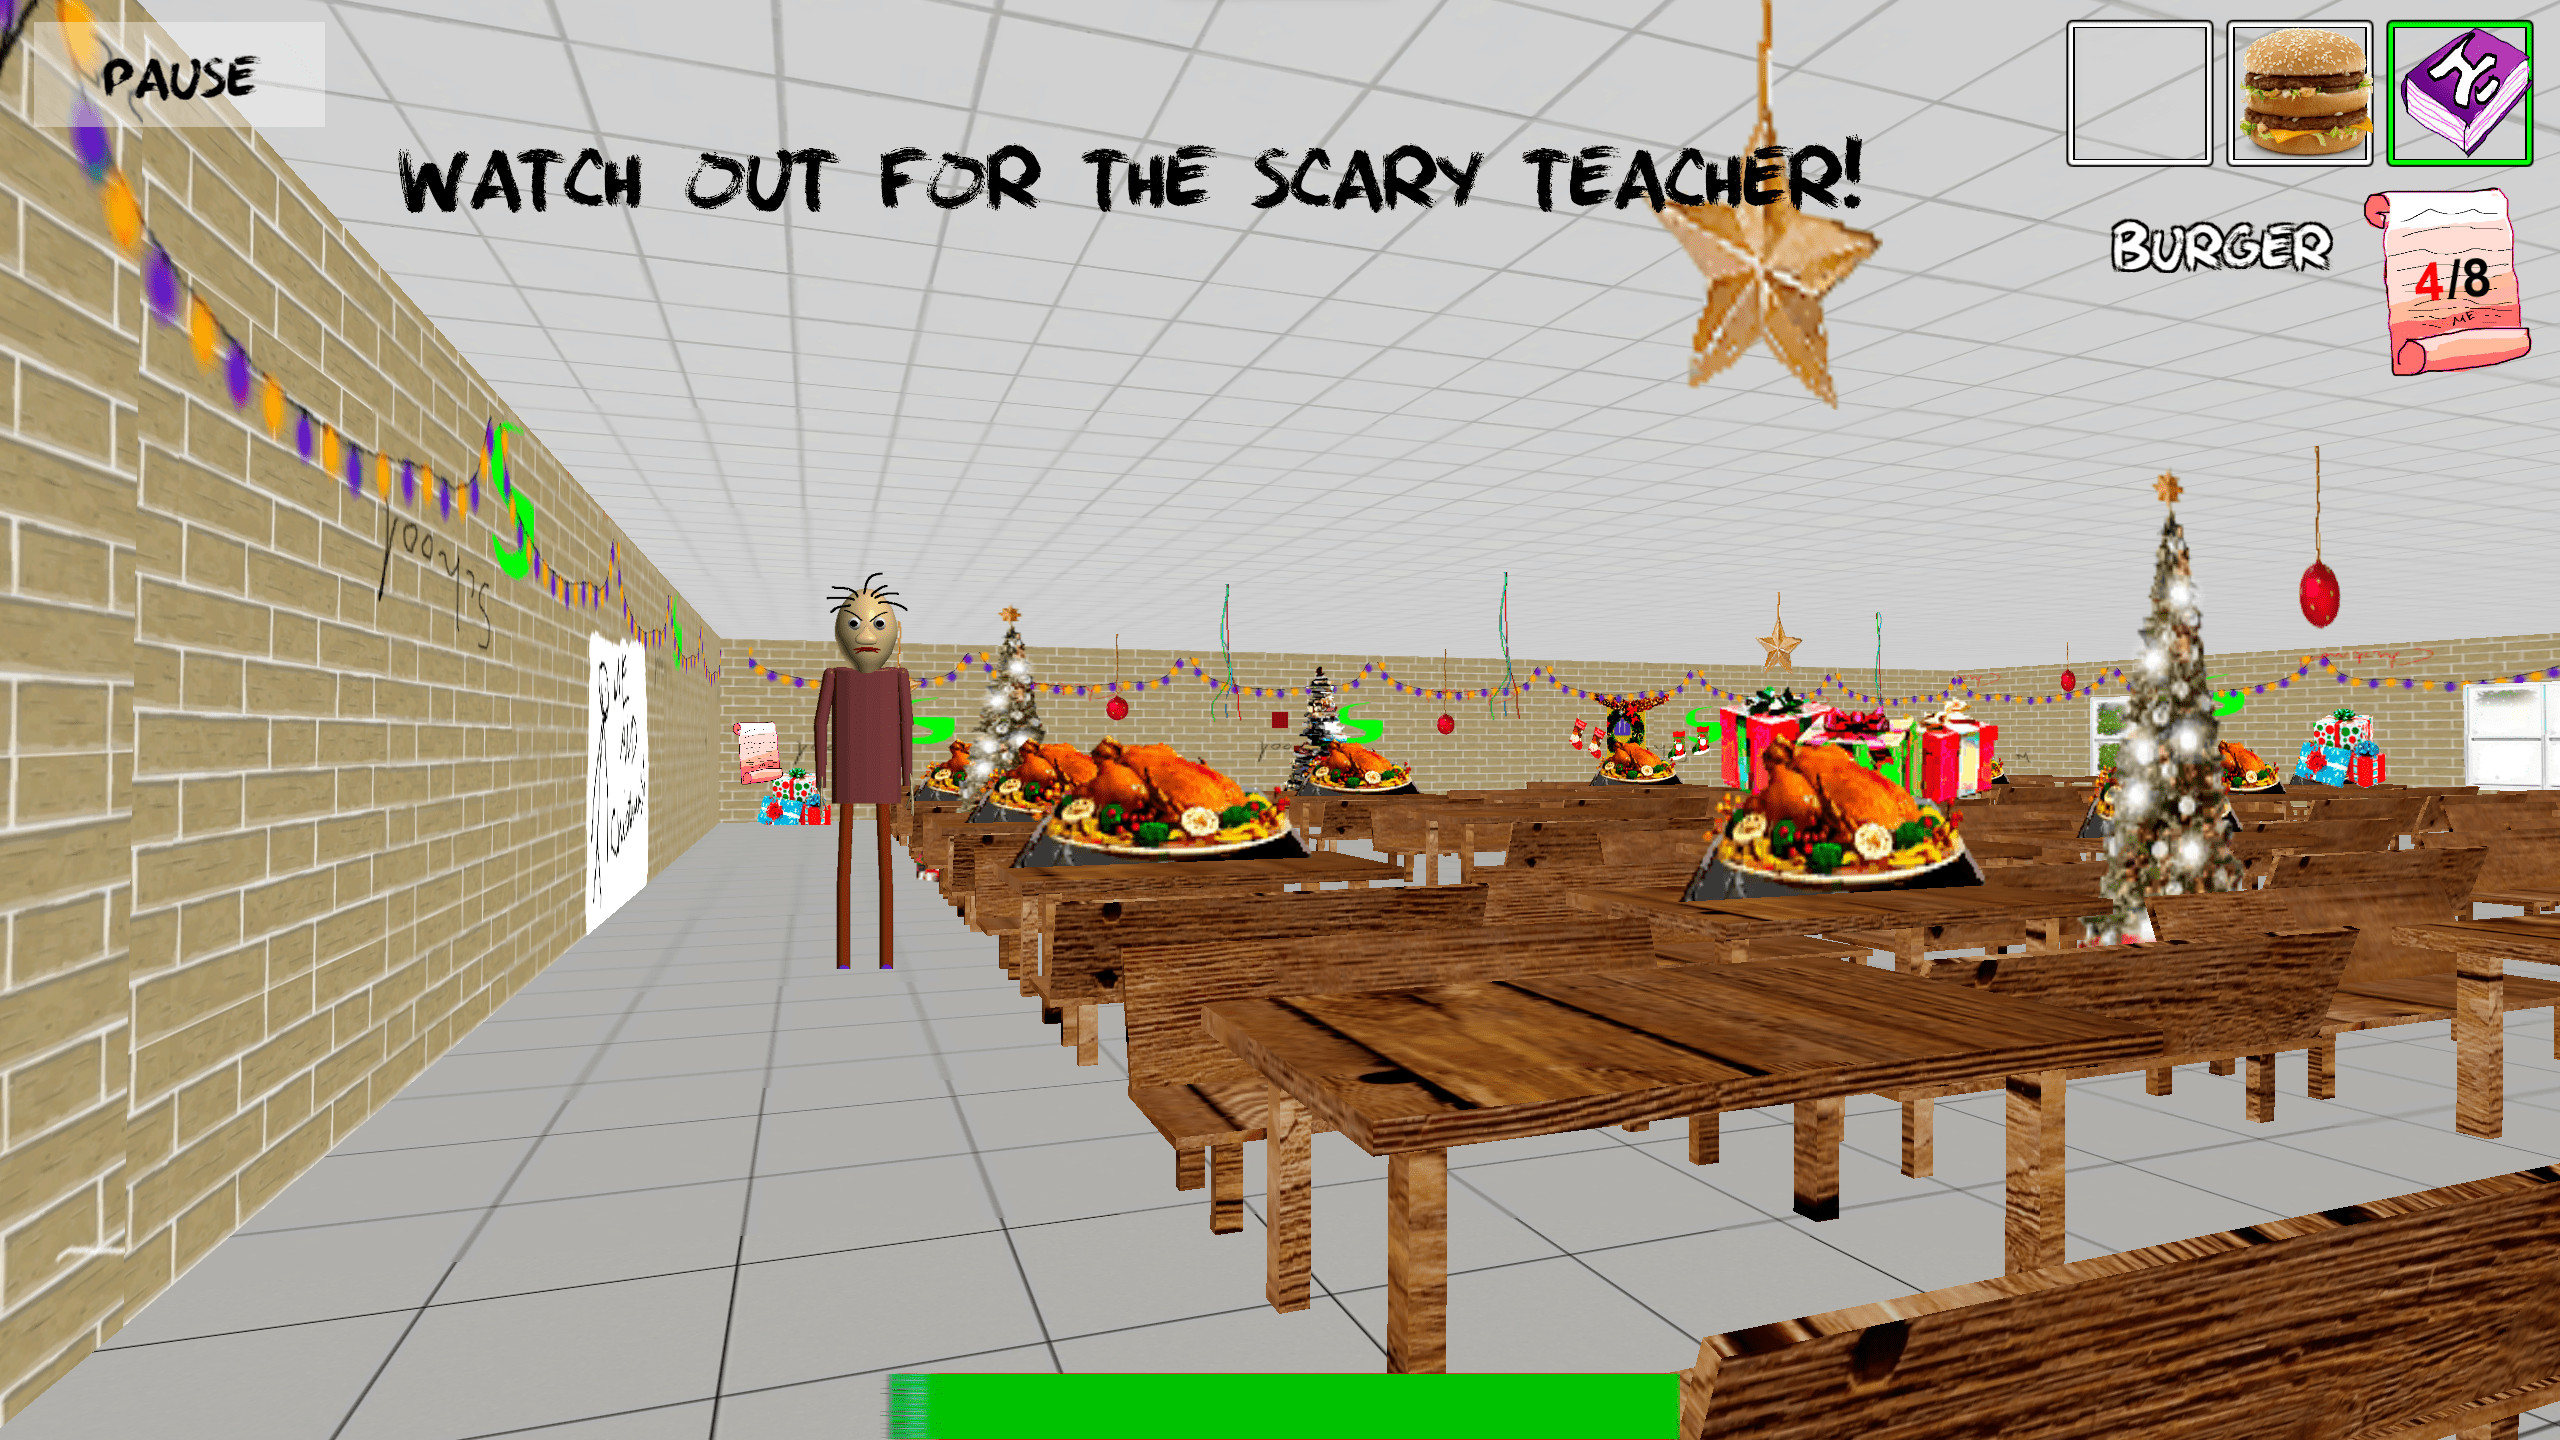 Scary Teacher 3D Game Play Online